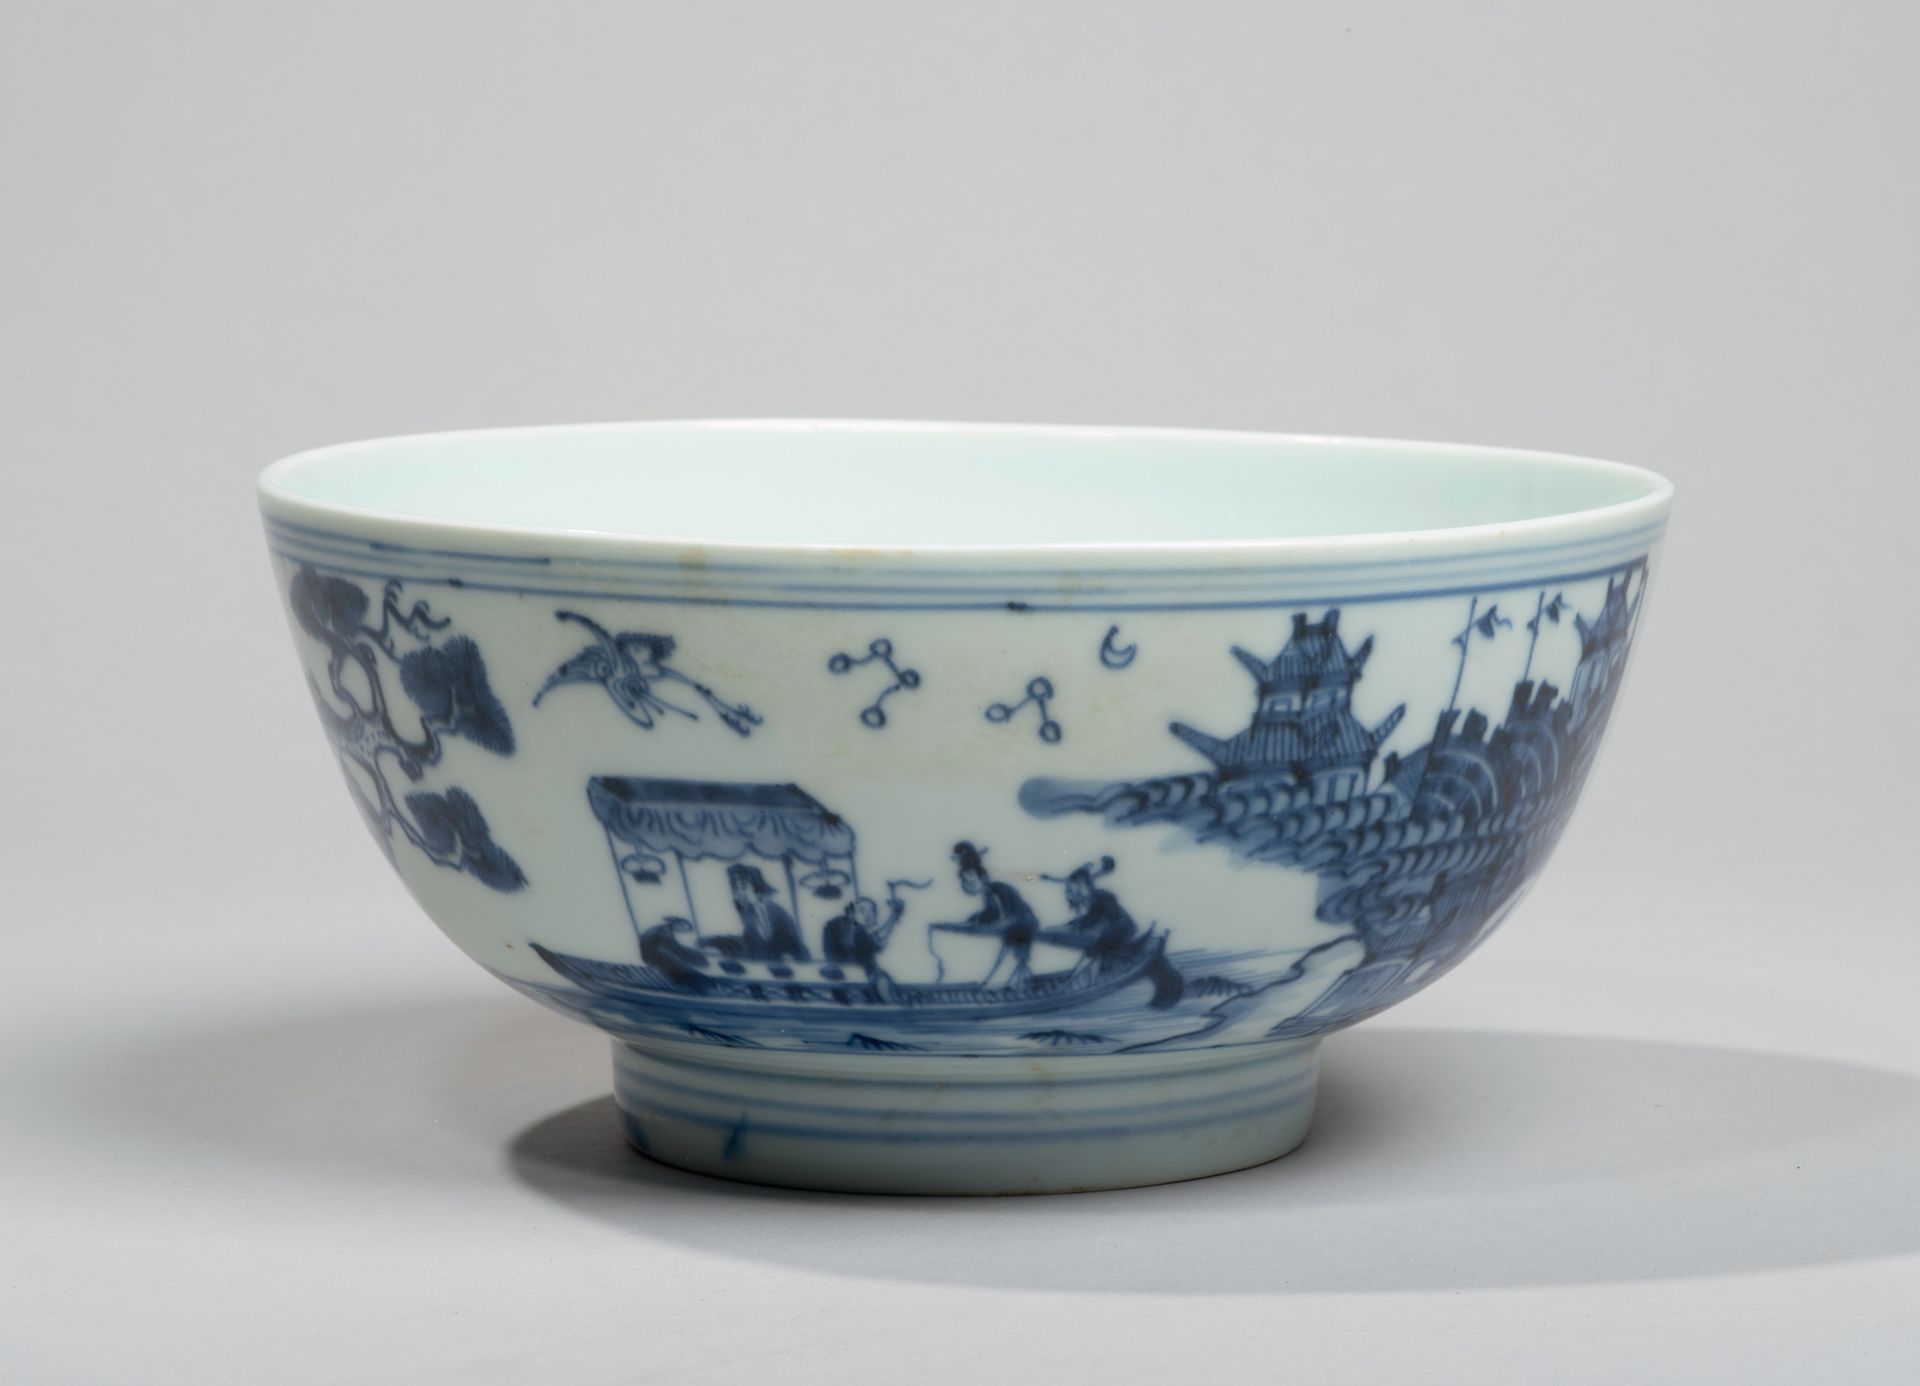 VIETNAM, Hue - XIXe siècle 
瓷碗在釉下青花中装饰着星座下的湖上小船。背面是成化的天书款。直径17.5厘米